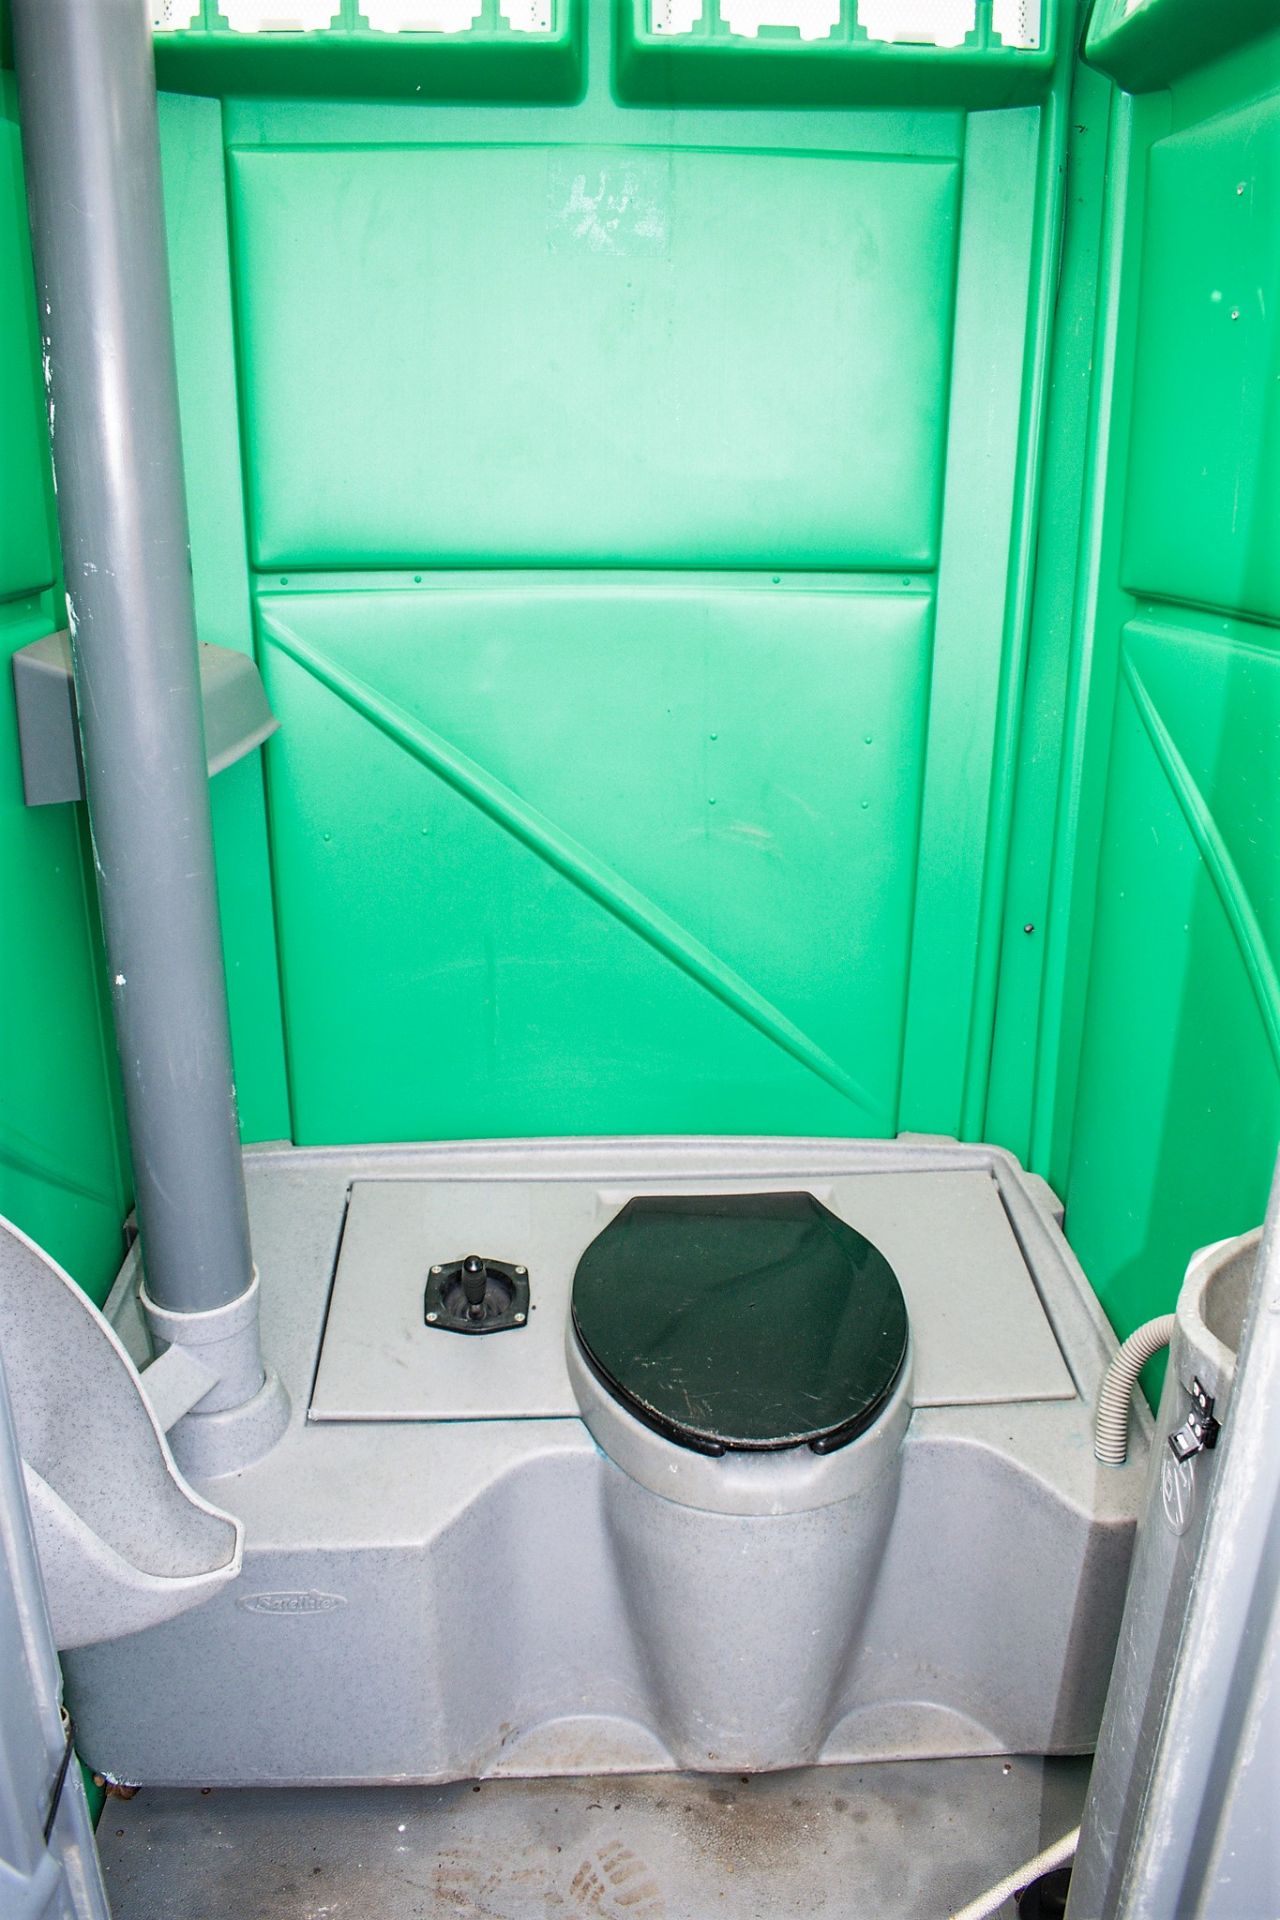 Plastic portable site toilet A162617 - Image 2 of 2